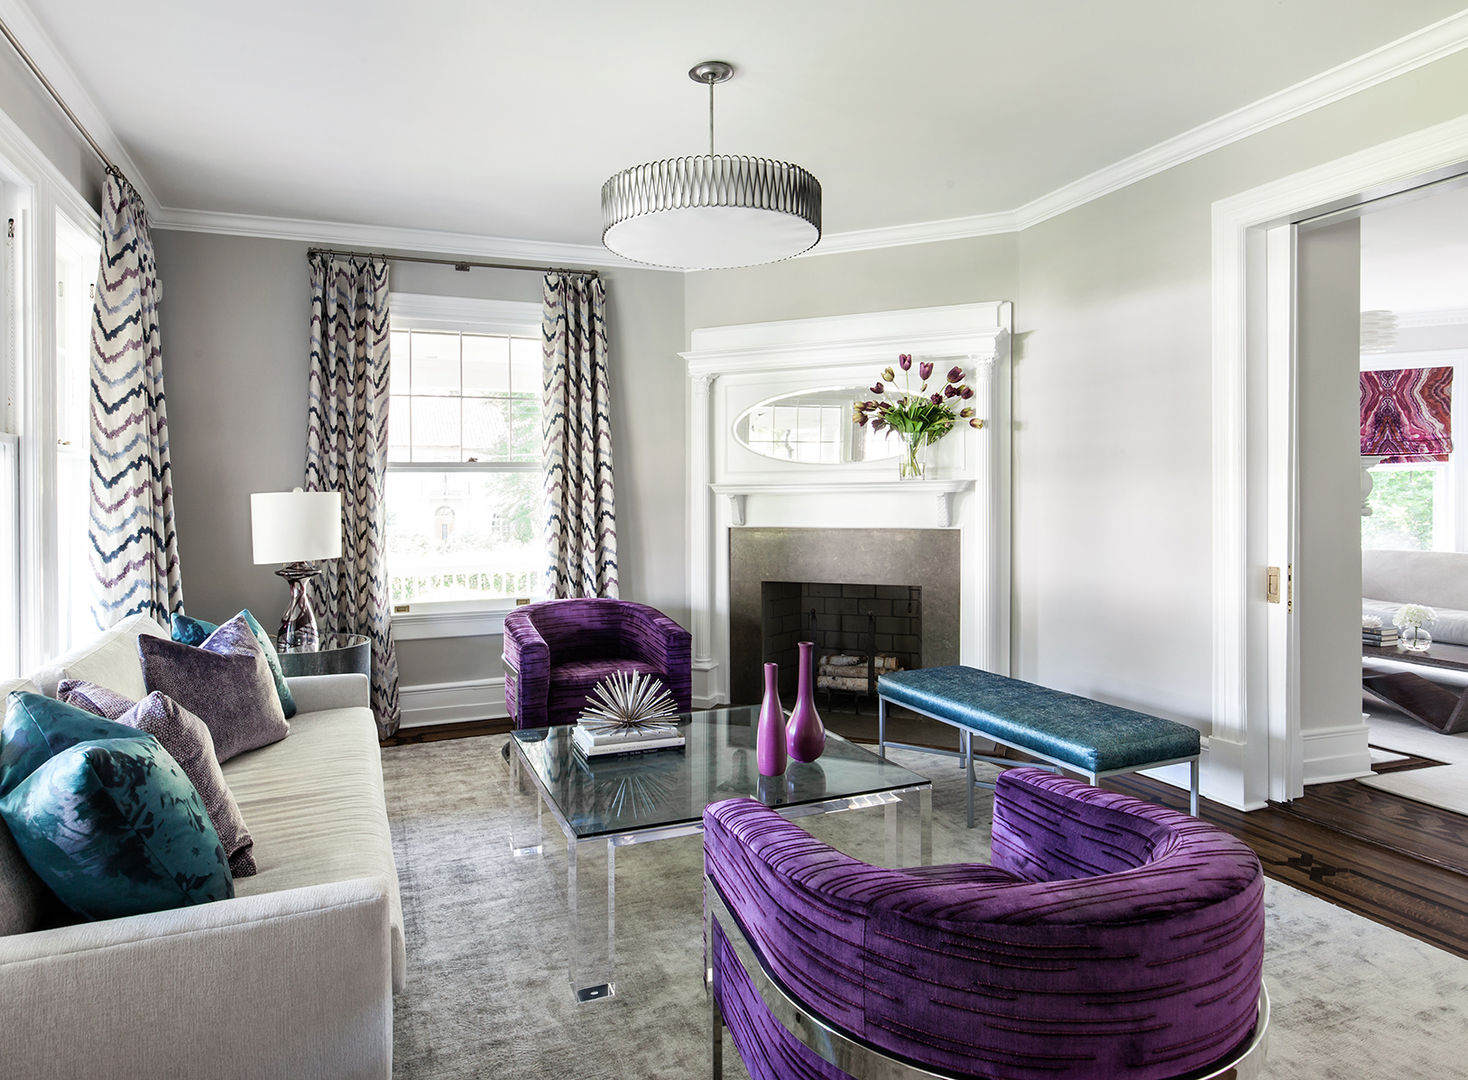 Living Room Clean Design 现代客厅設計點子、靈感 & 圖片